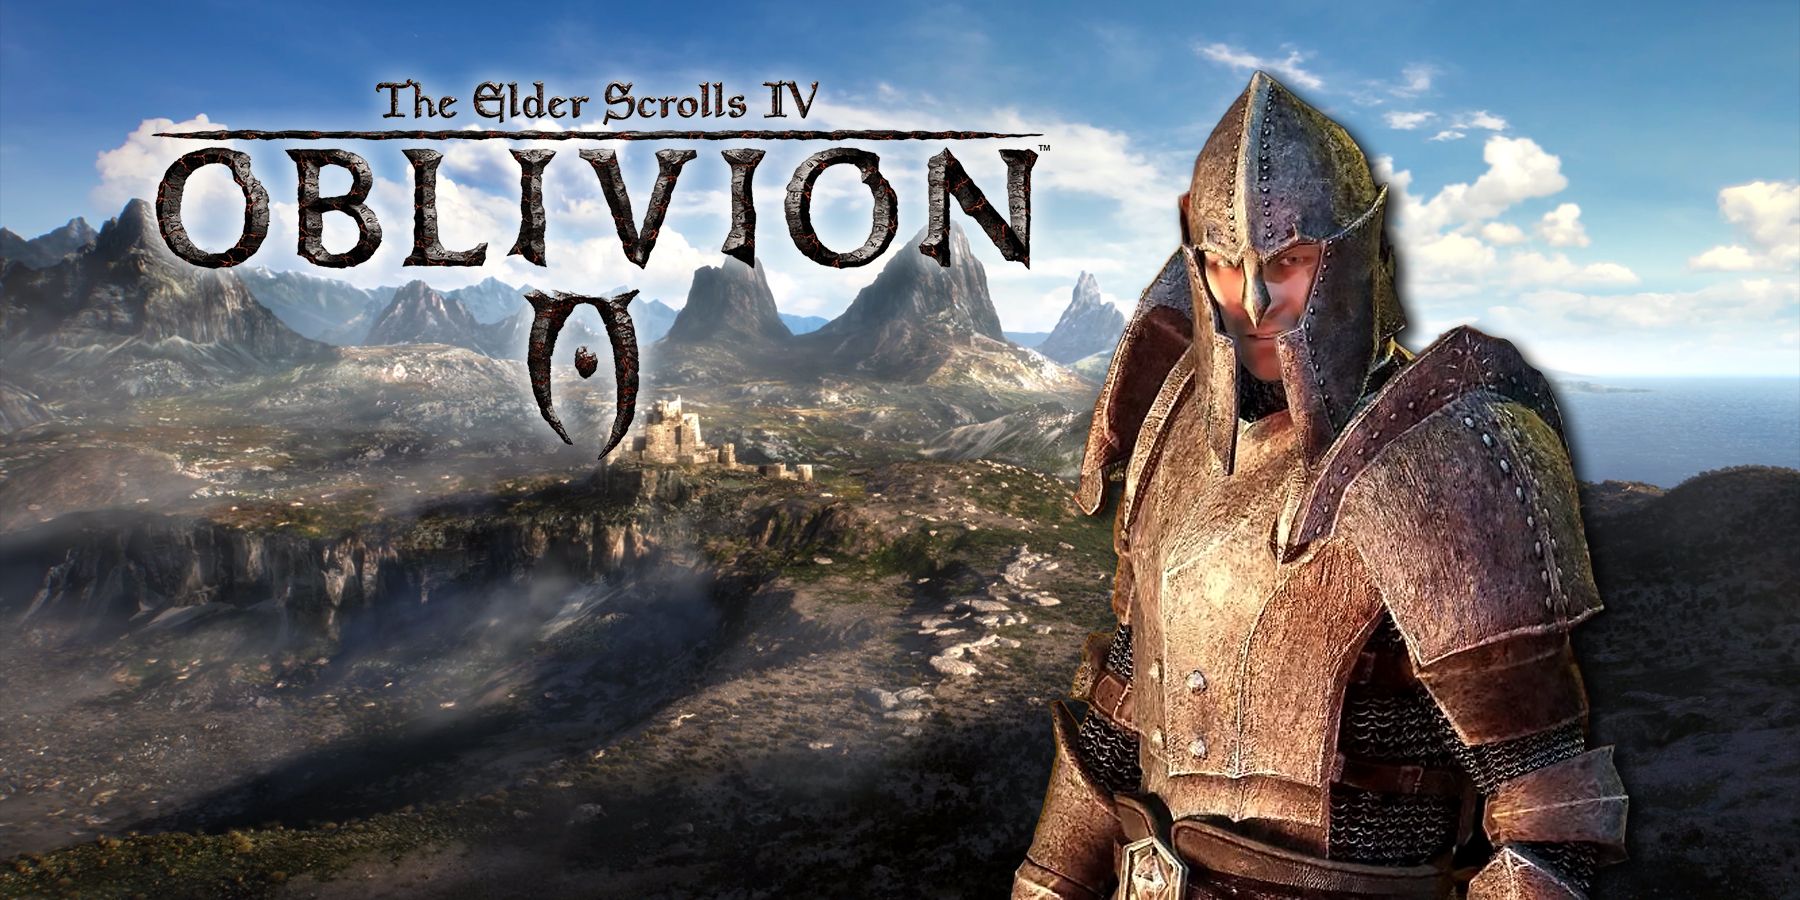 Elder Scrolls Oblivion NPC and Oblivion logo in front of Elder Scrolls 6 background